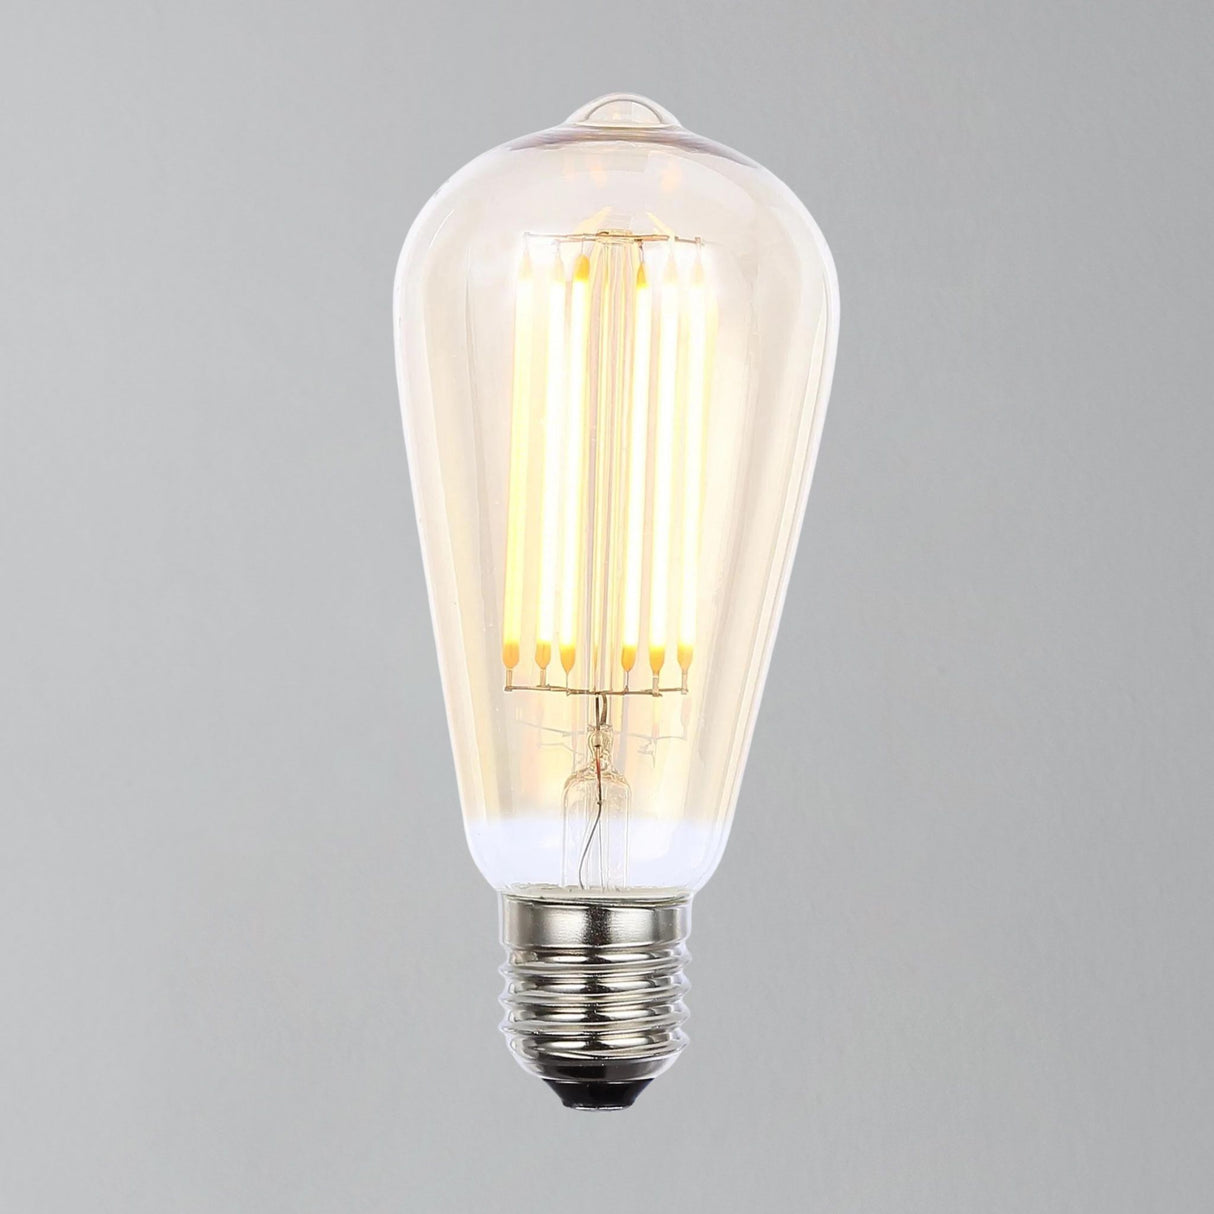 450lm ST64 Tinted 2200k Dimmable LED Filament Light Bulb E27 (40w eqv)